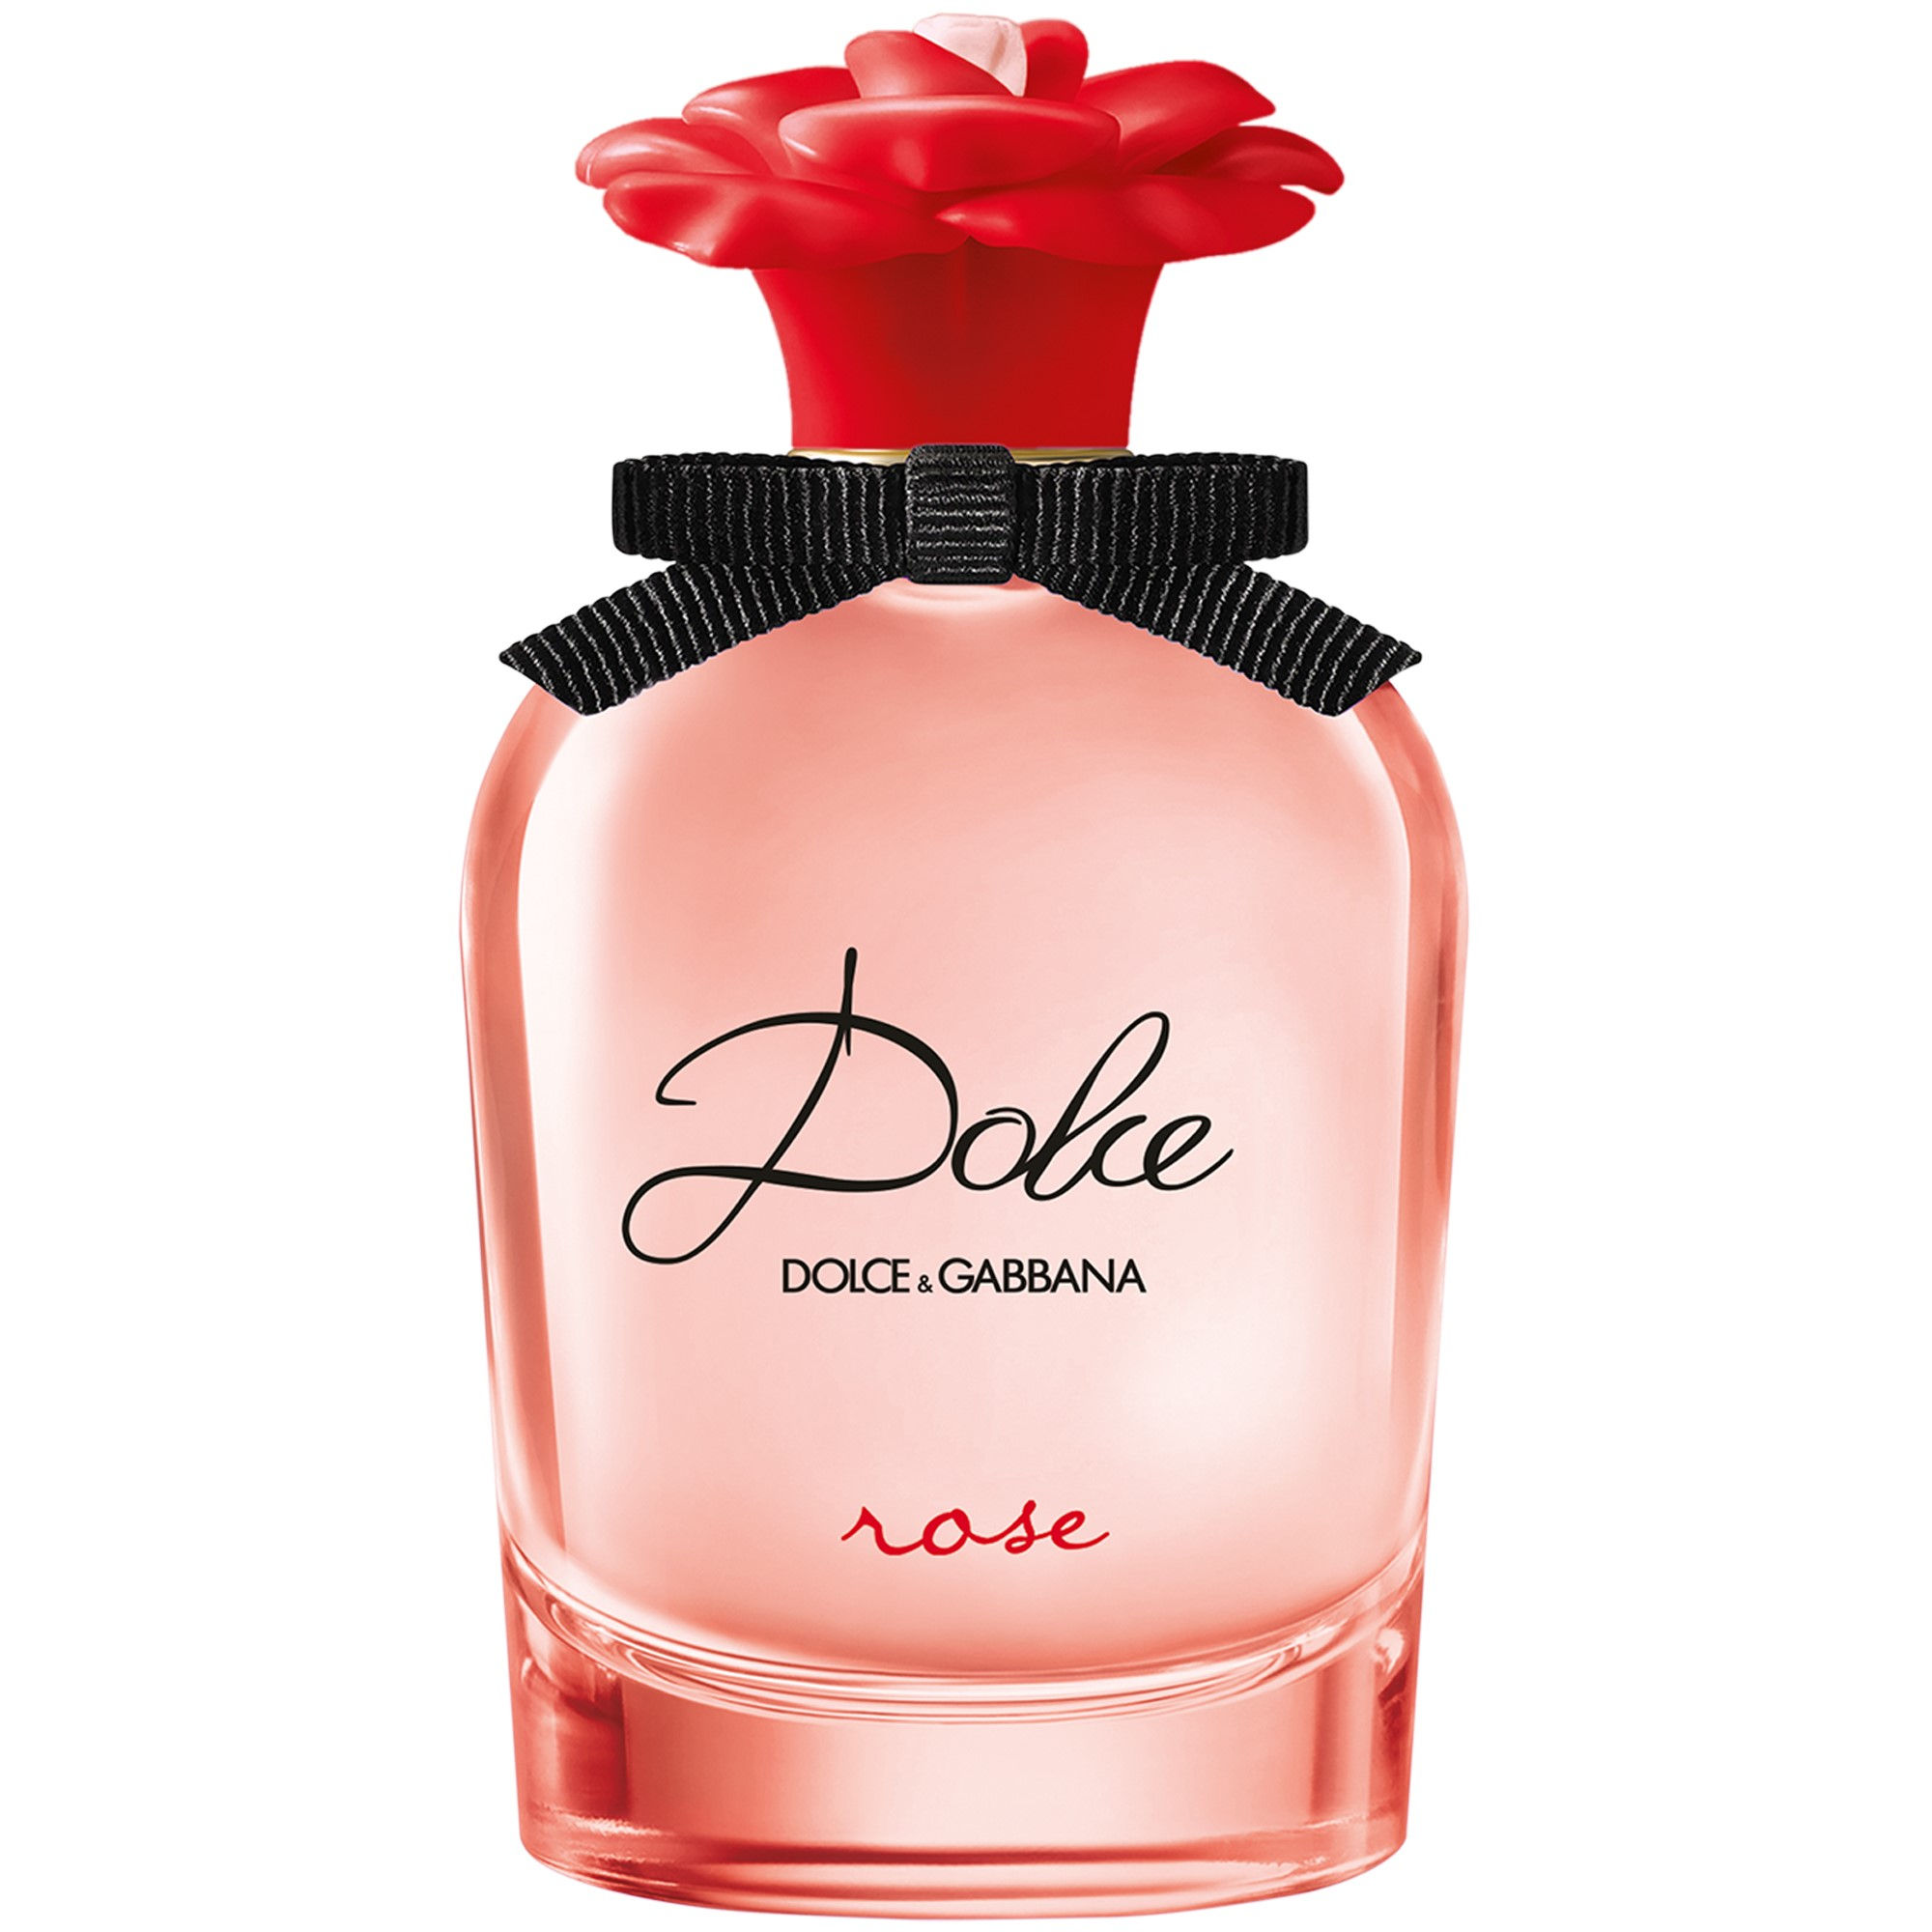 Dolce & Gabbana Dolce Rose Eau de Toilette 75 ml